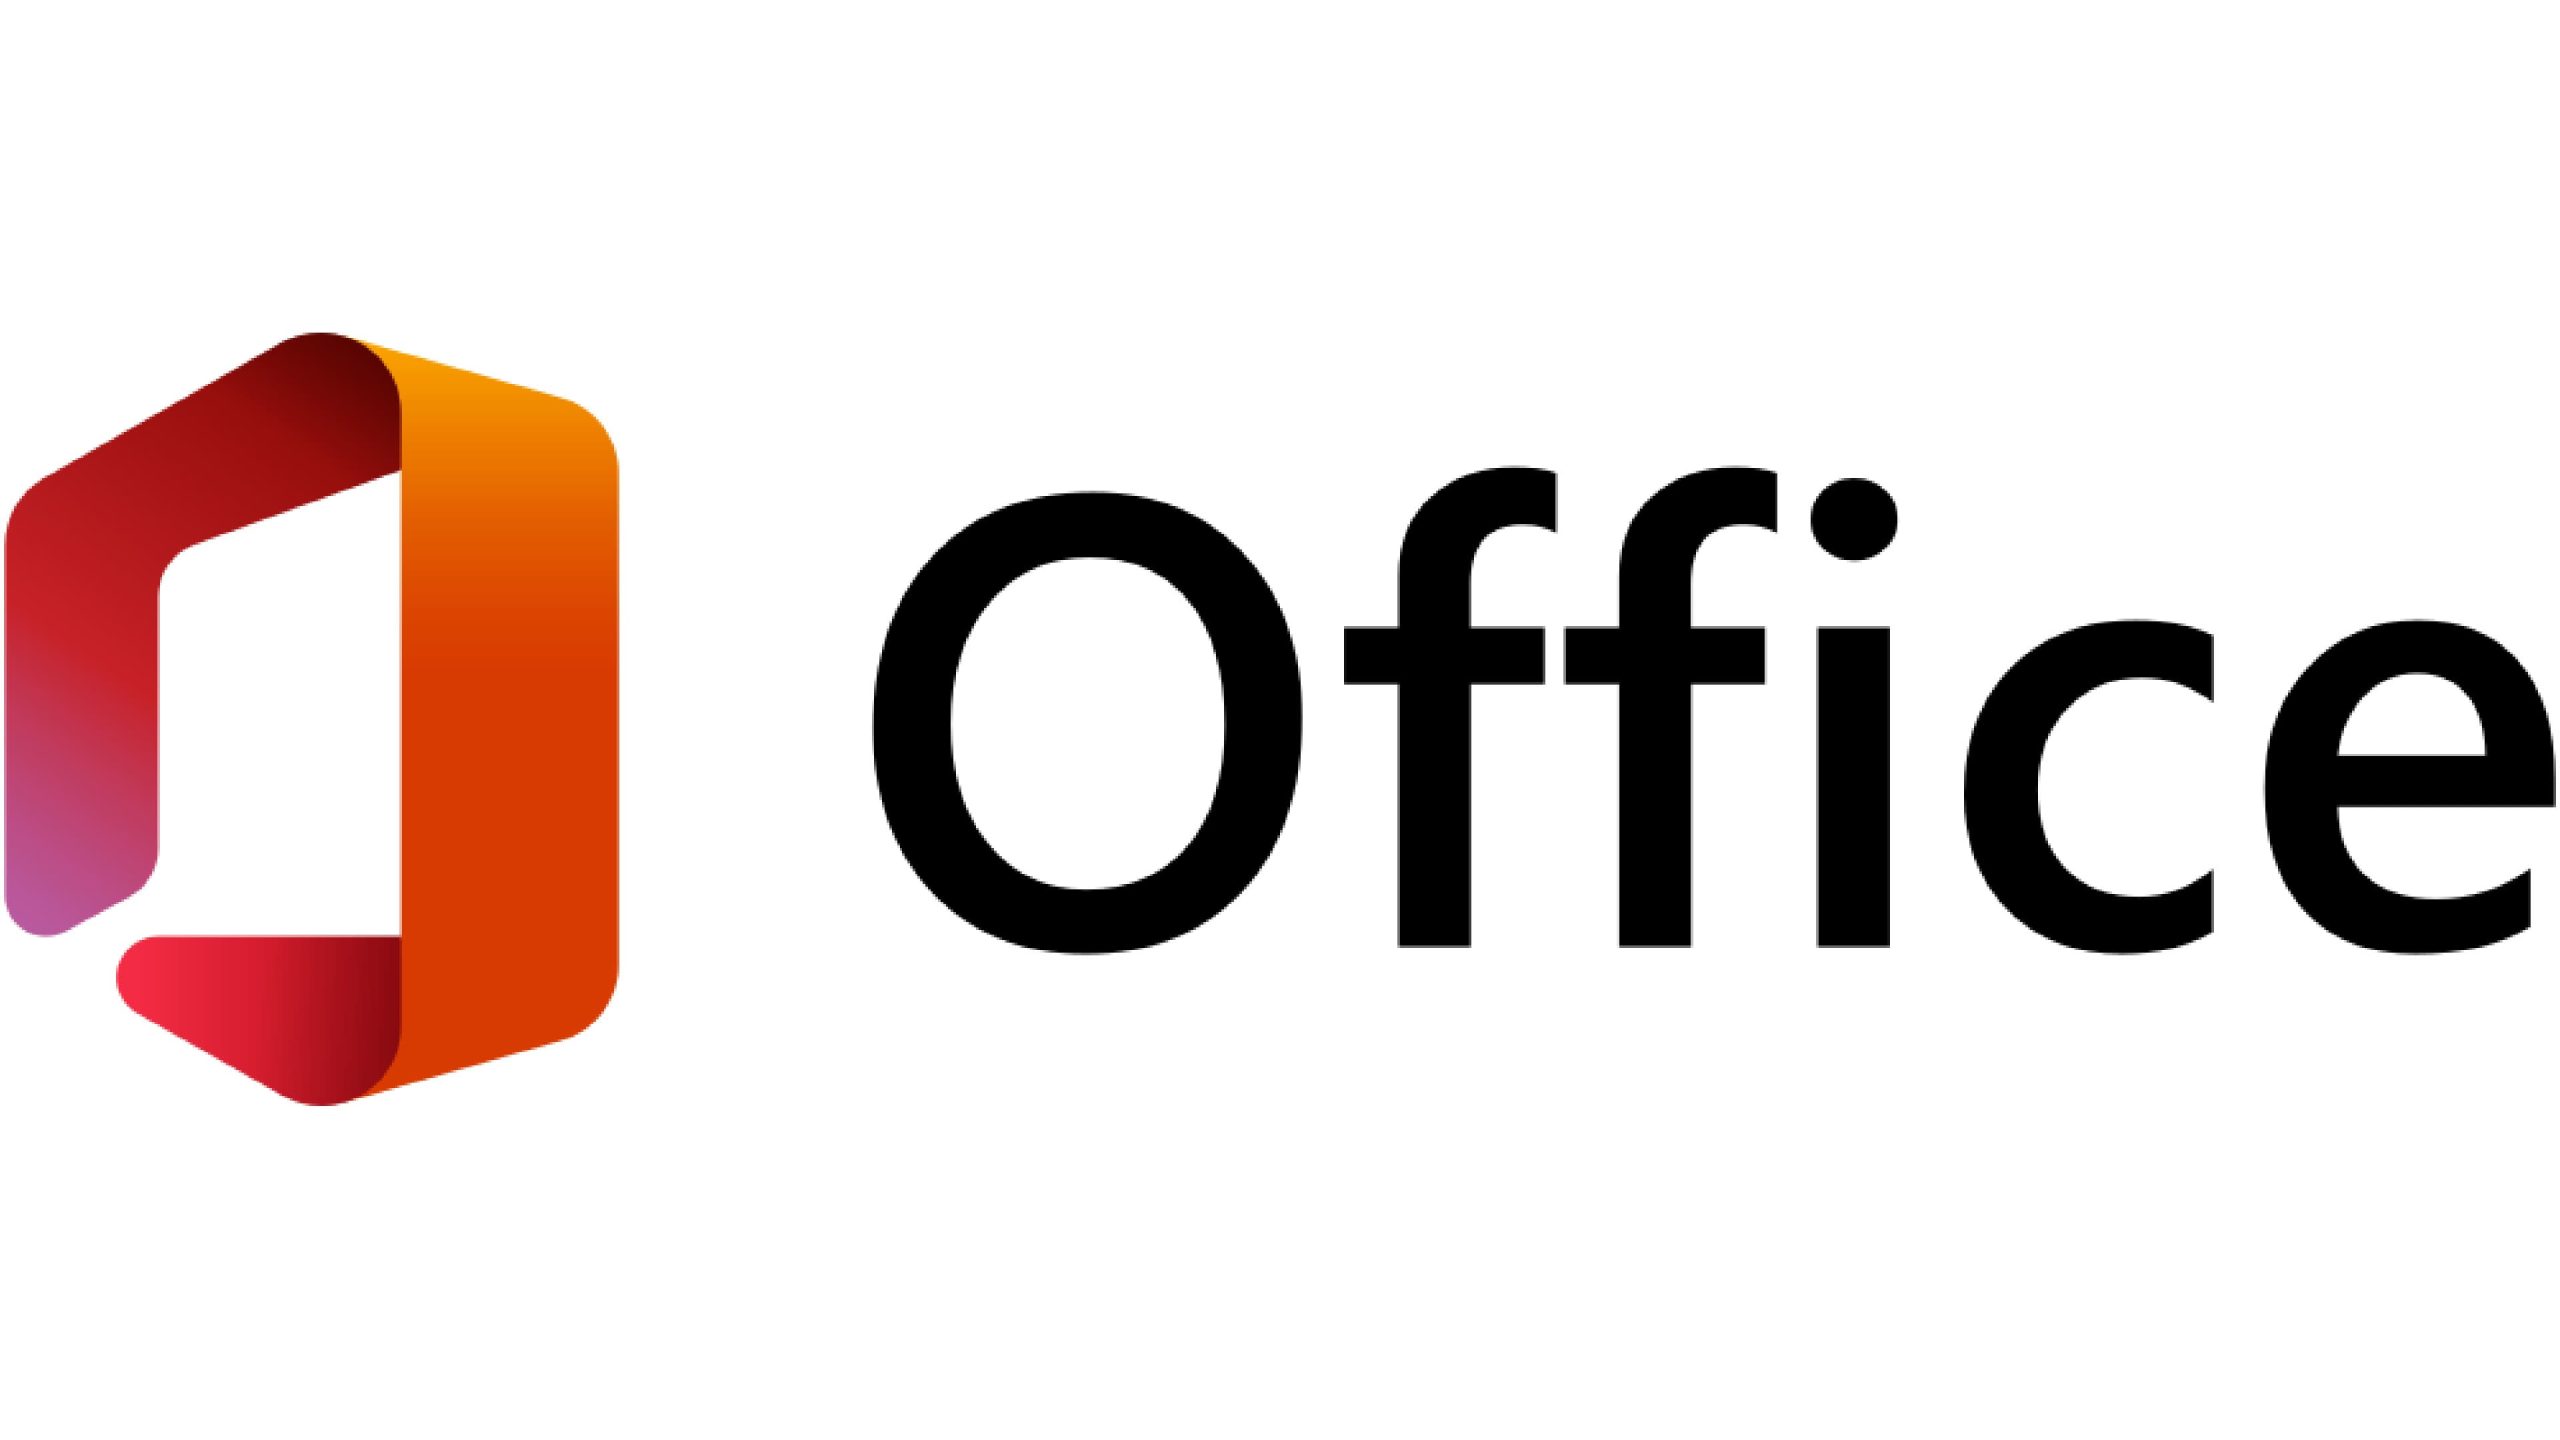 Microsoft Office logo image